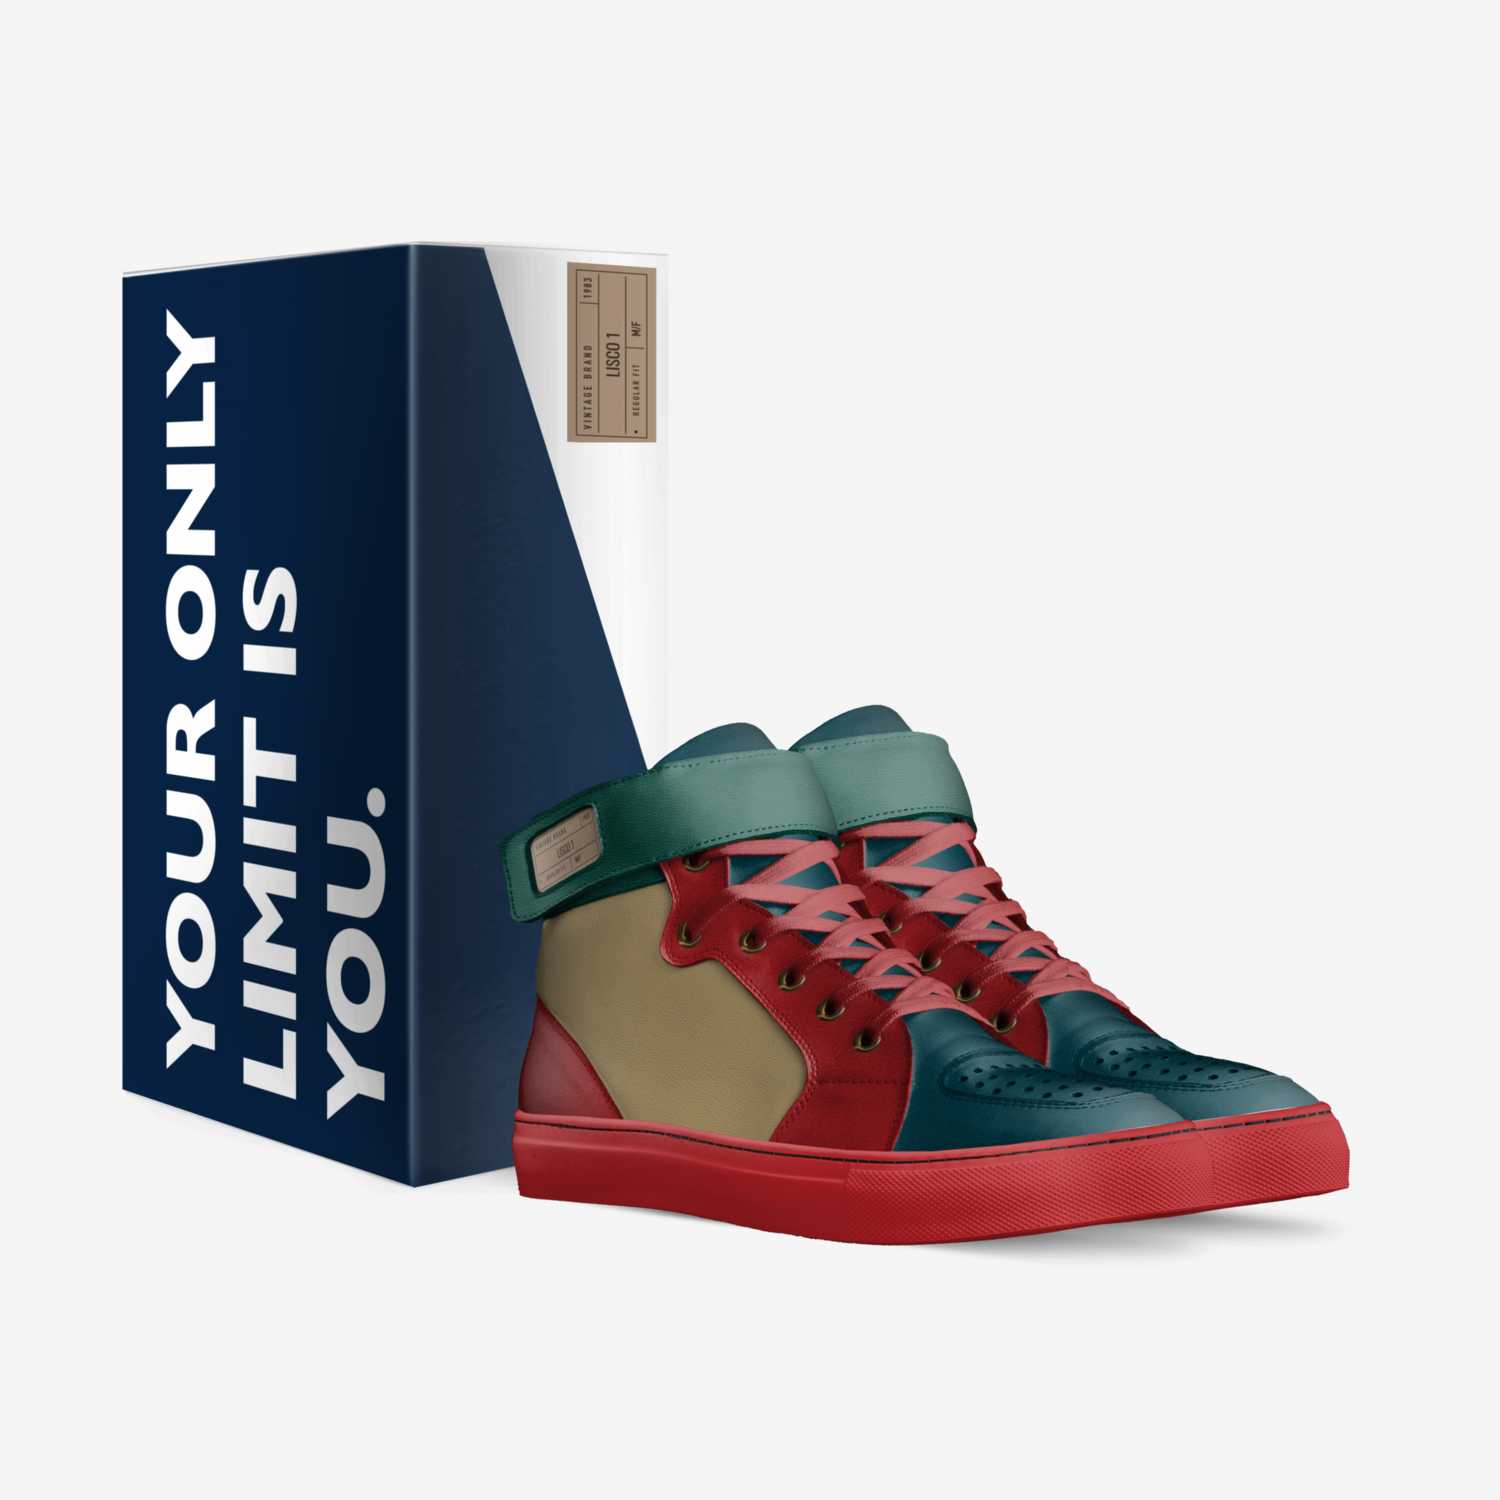 Display Your Kicks in Louis Vuitton's Sneaker Box